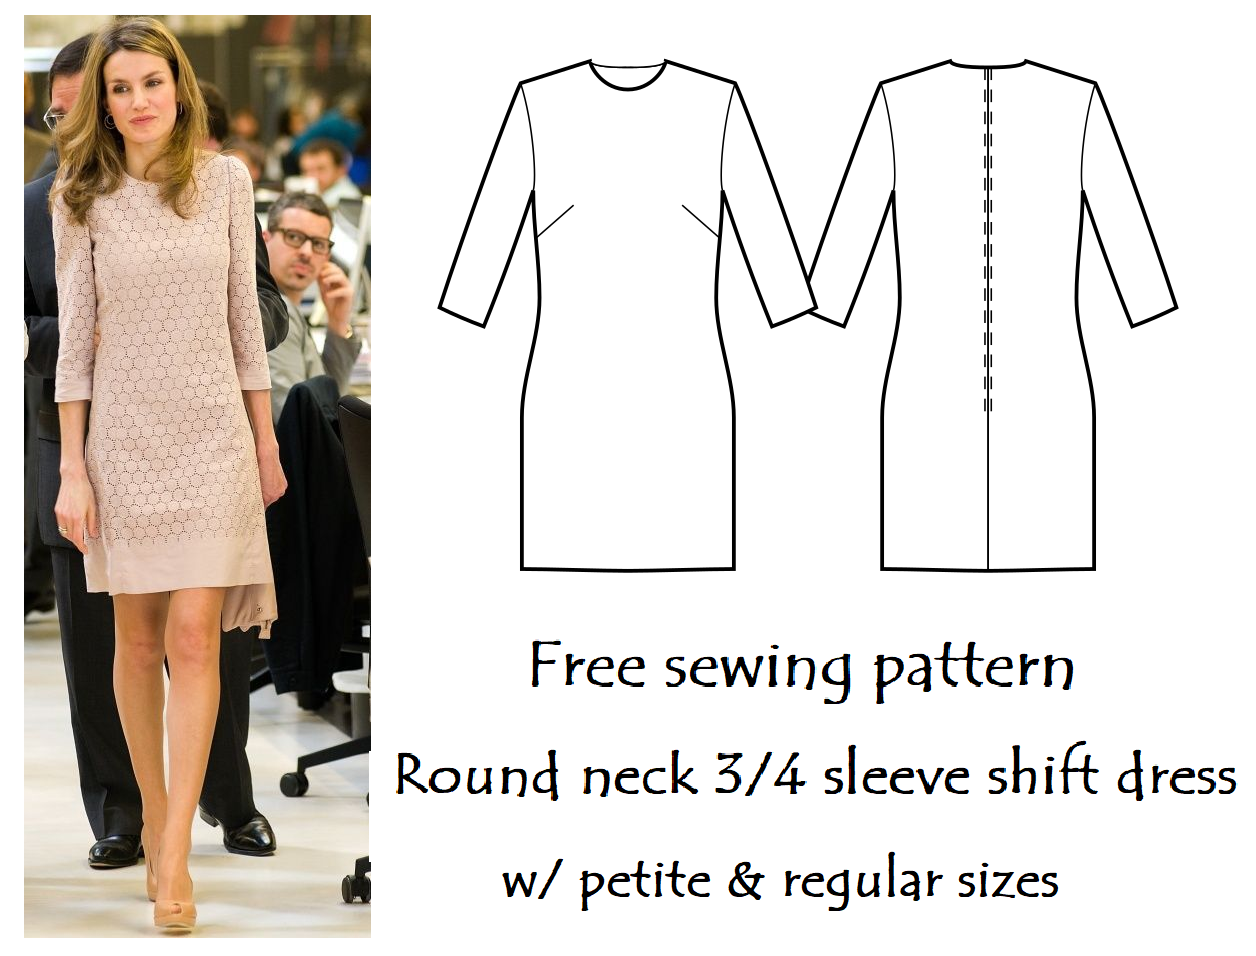 The Little Sewist: Round neck 3/4 sleeve shift dress pattern